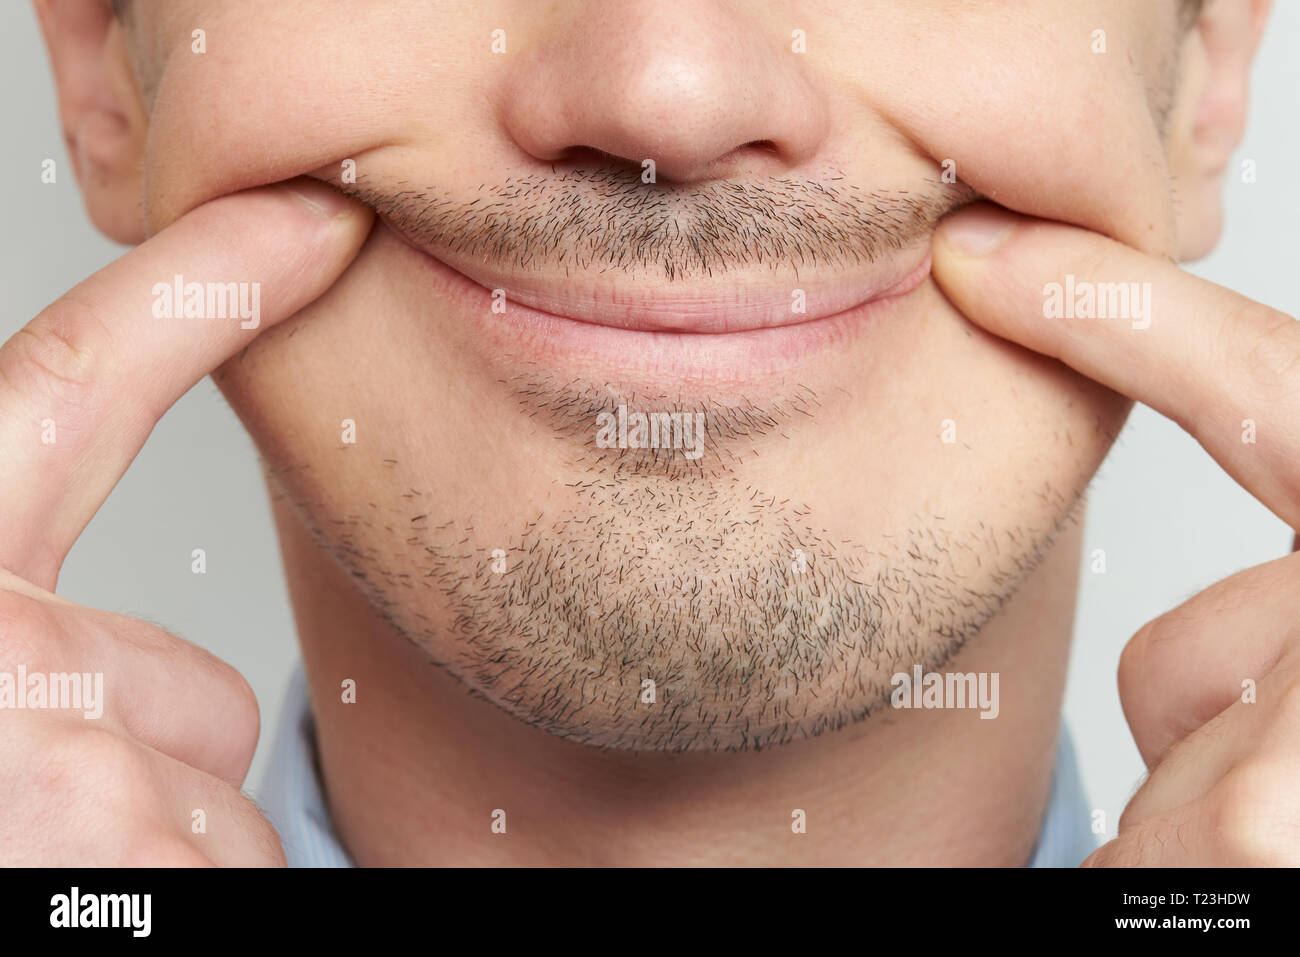 Making lips smile. Fake smile concept on man face Stock Photo